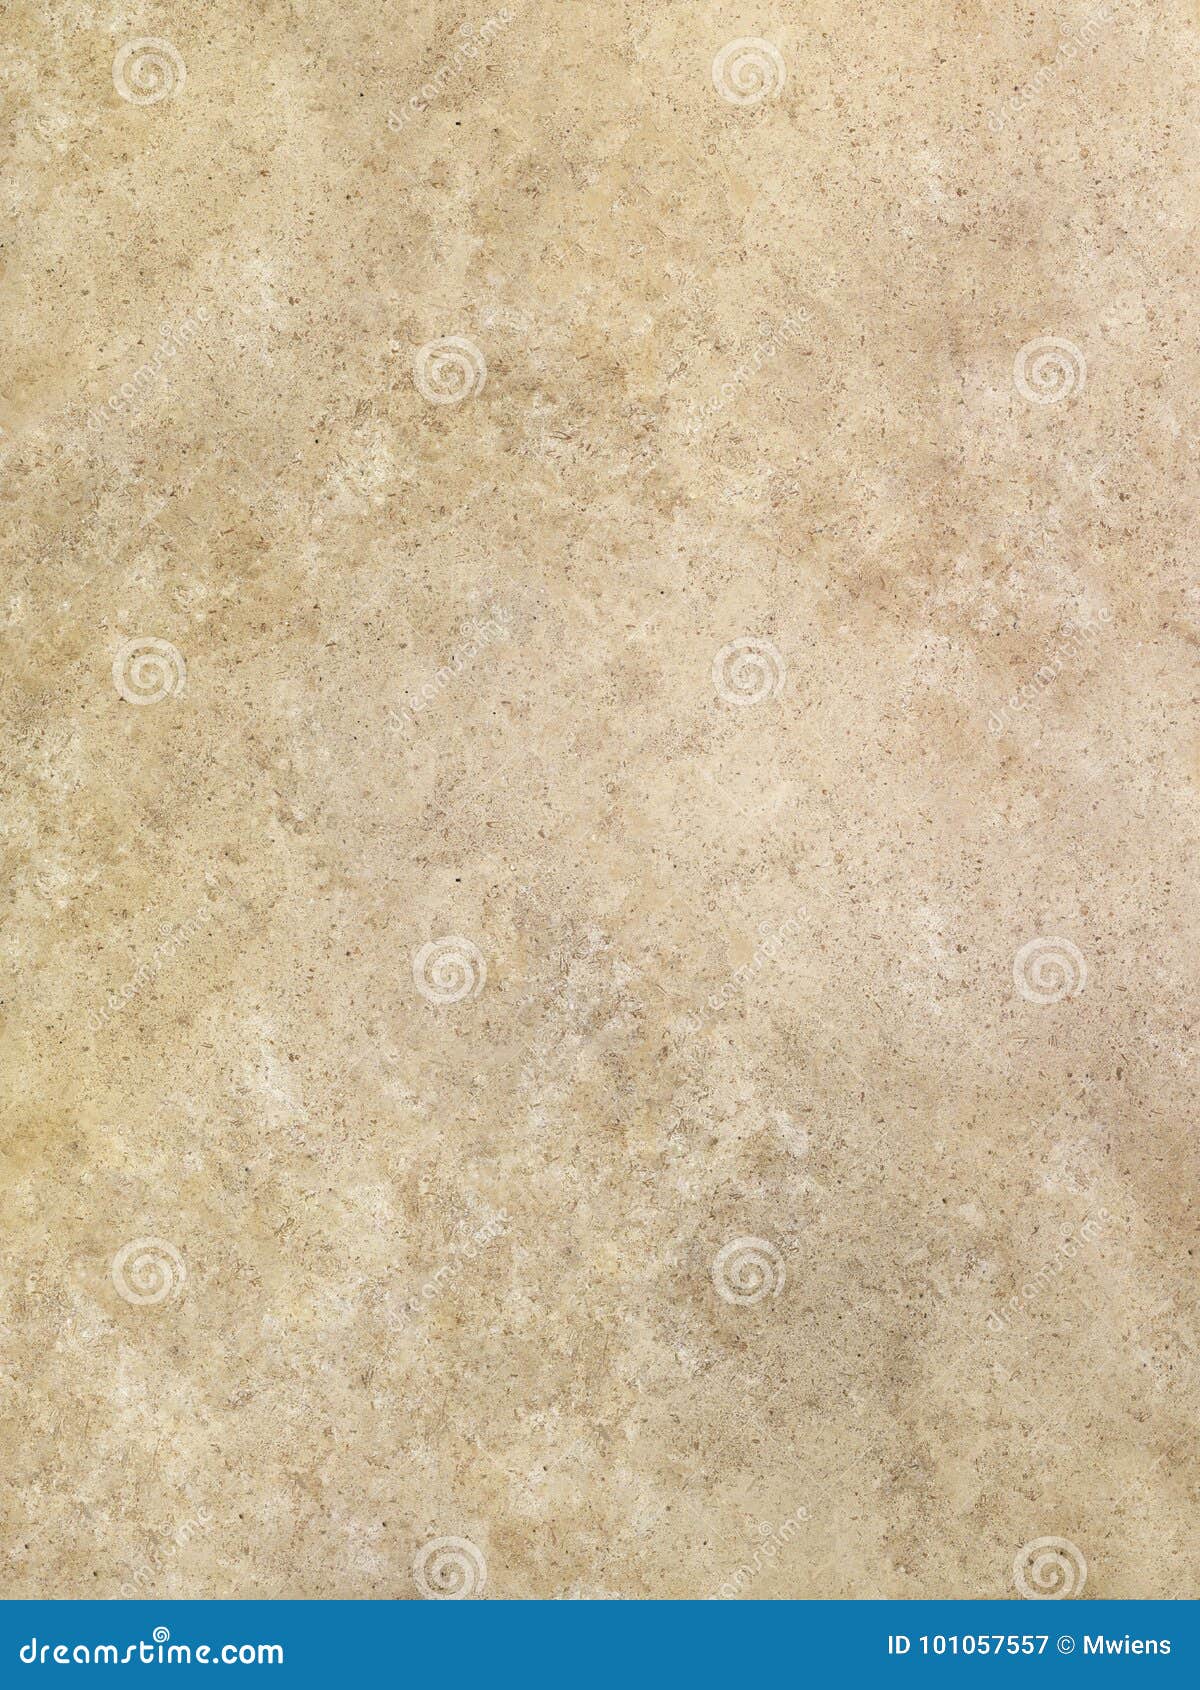 tan travertine marble surface texture